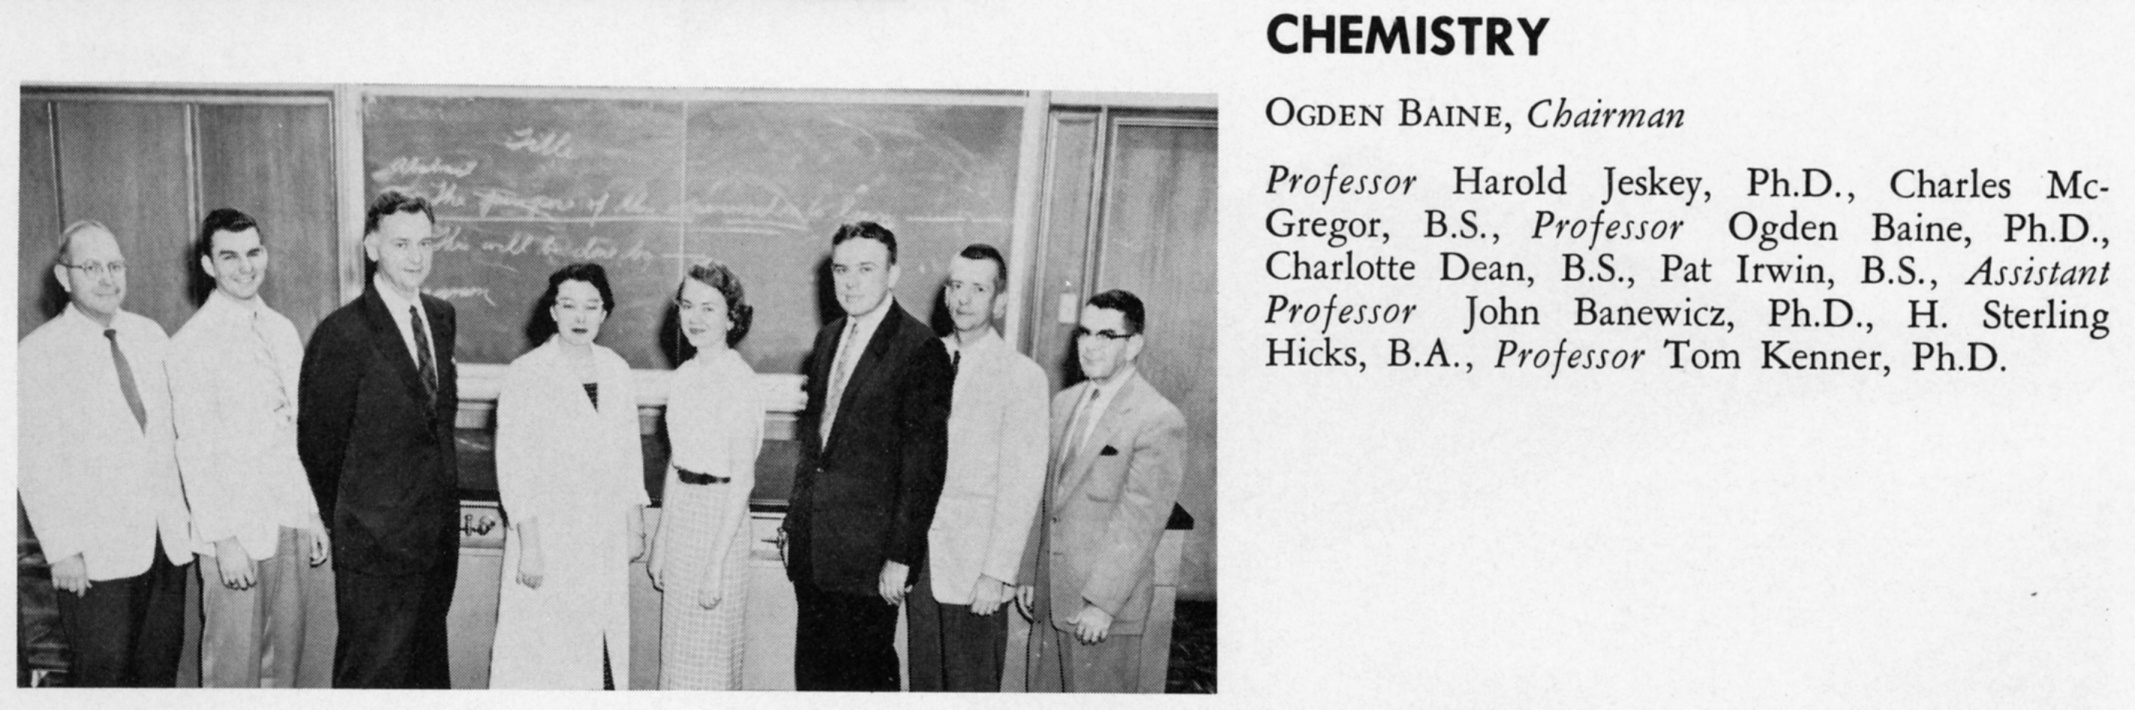 1957_Chemistry.jpg